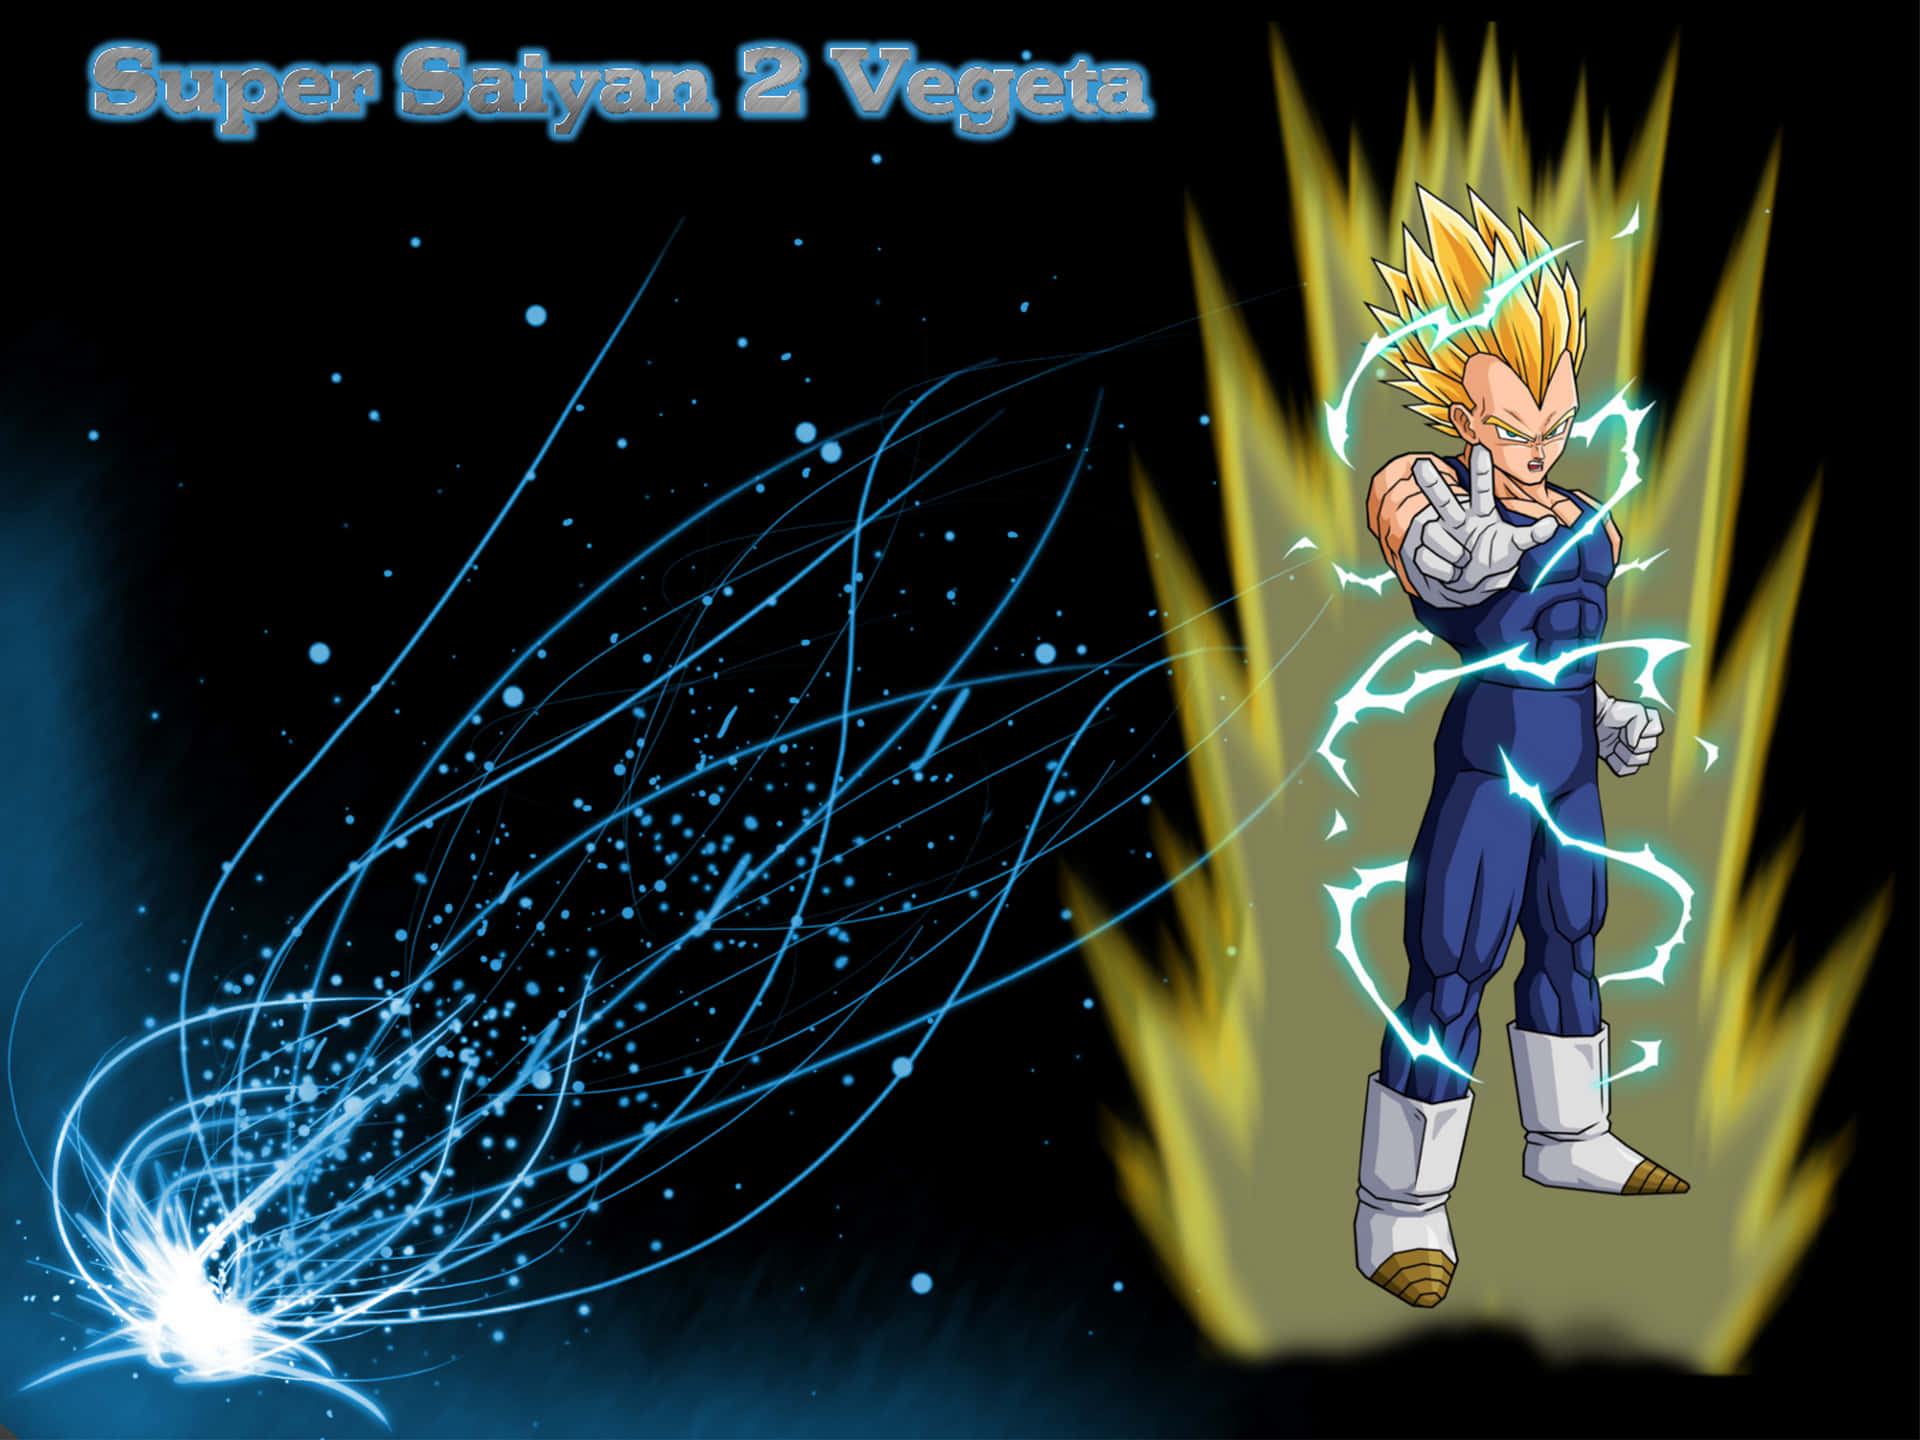 Stunning Power] Super Saiyan 2 Vegeta